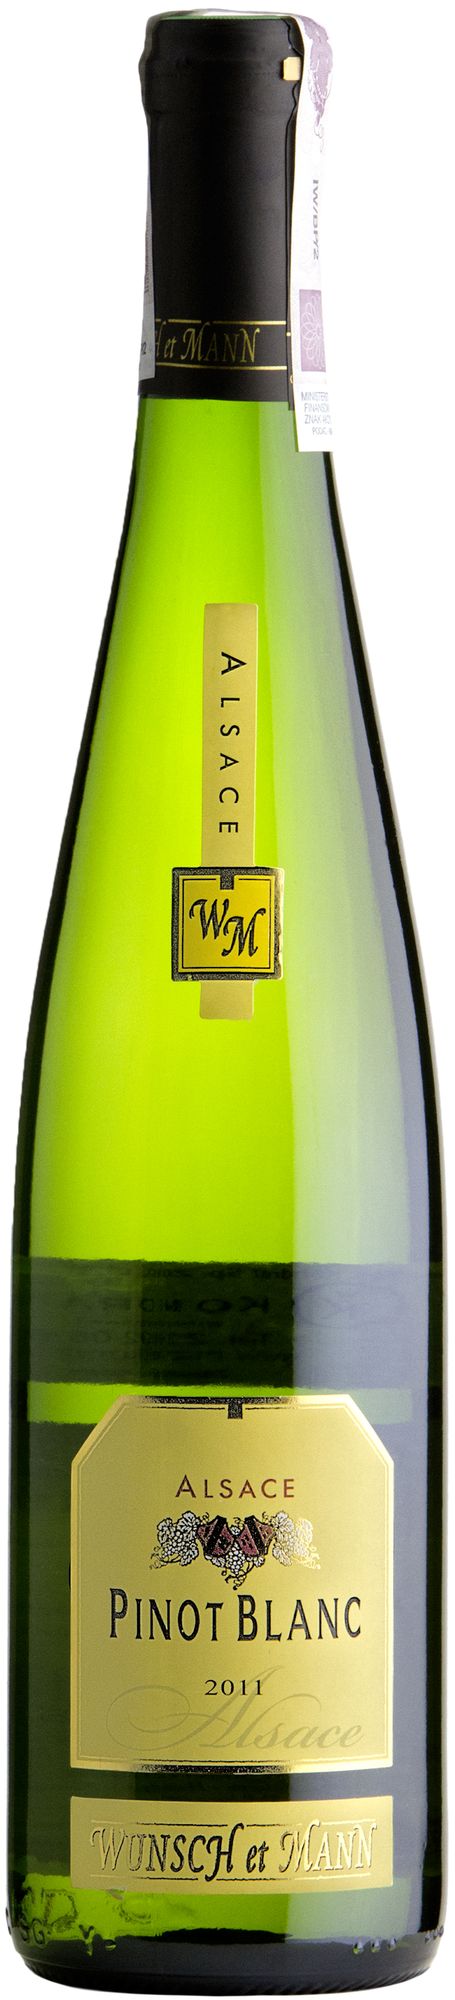 Wino Wunsch & Mann Pinot Blanc Alsace AOC